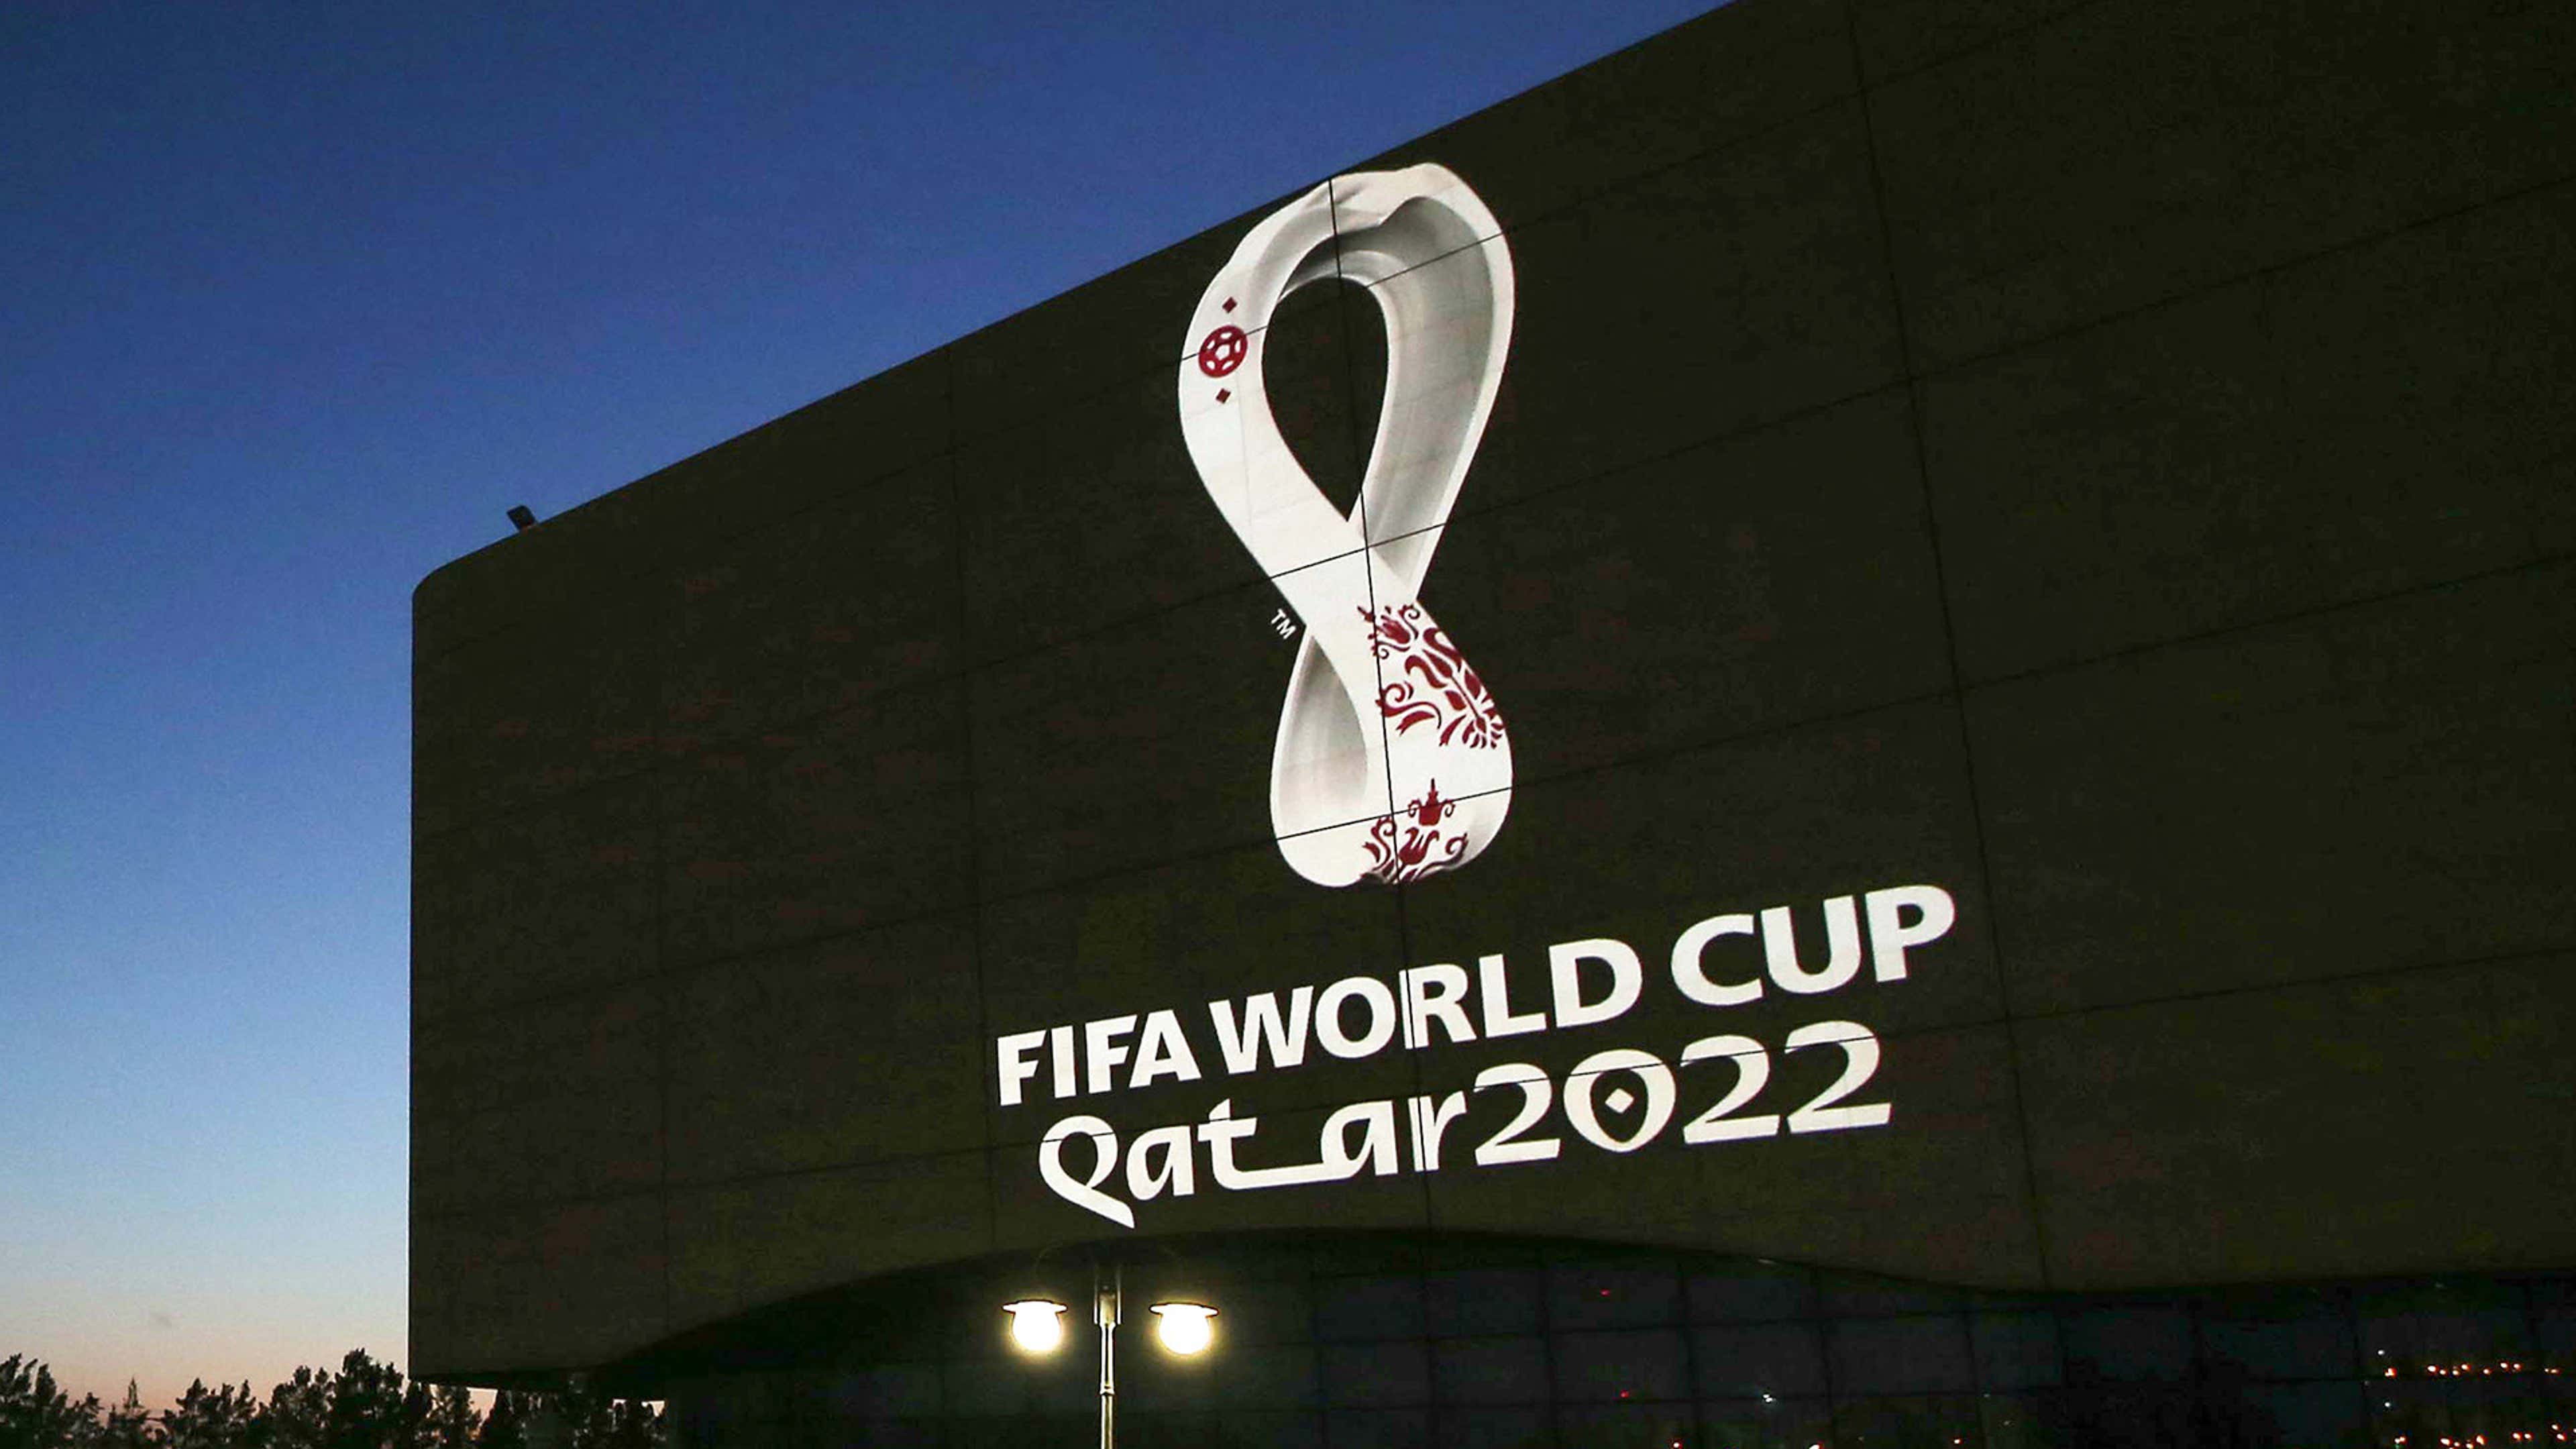 FIFA World Cup 2022 logo